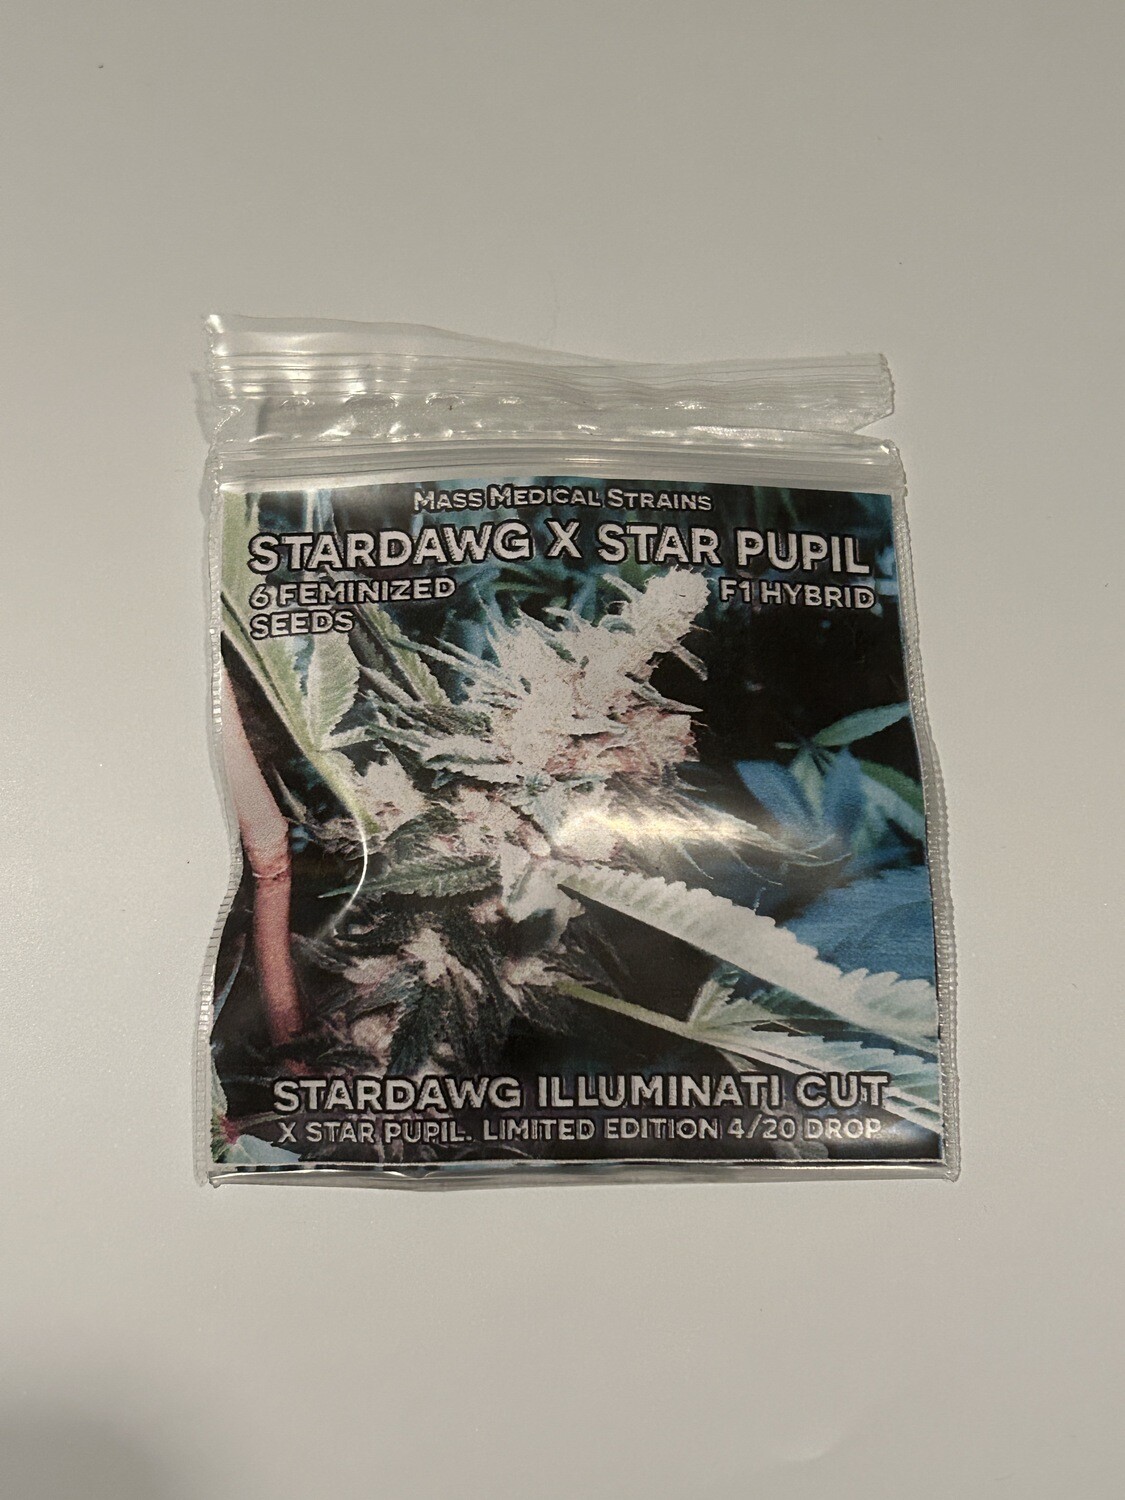 Stardawg Illuminati x Star Pupil - 6 Feminized Seeds - Mass Medical *Vault Item*